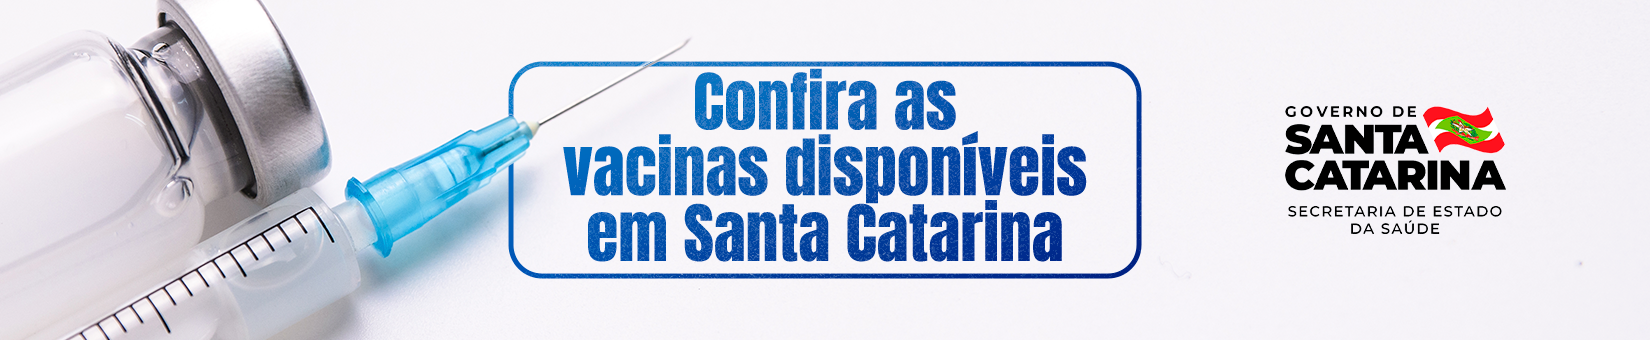 1650x340-Confira-as-vacinas-disponveis-em-Santa-Catarina